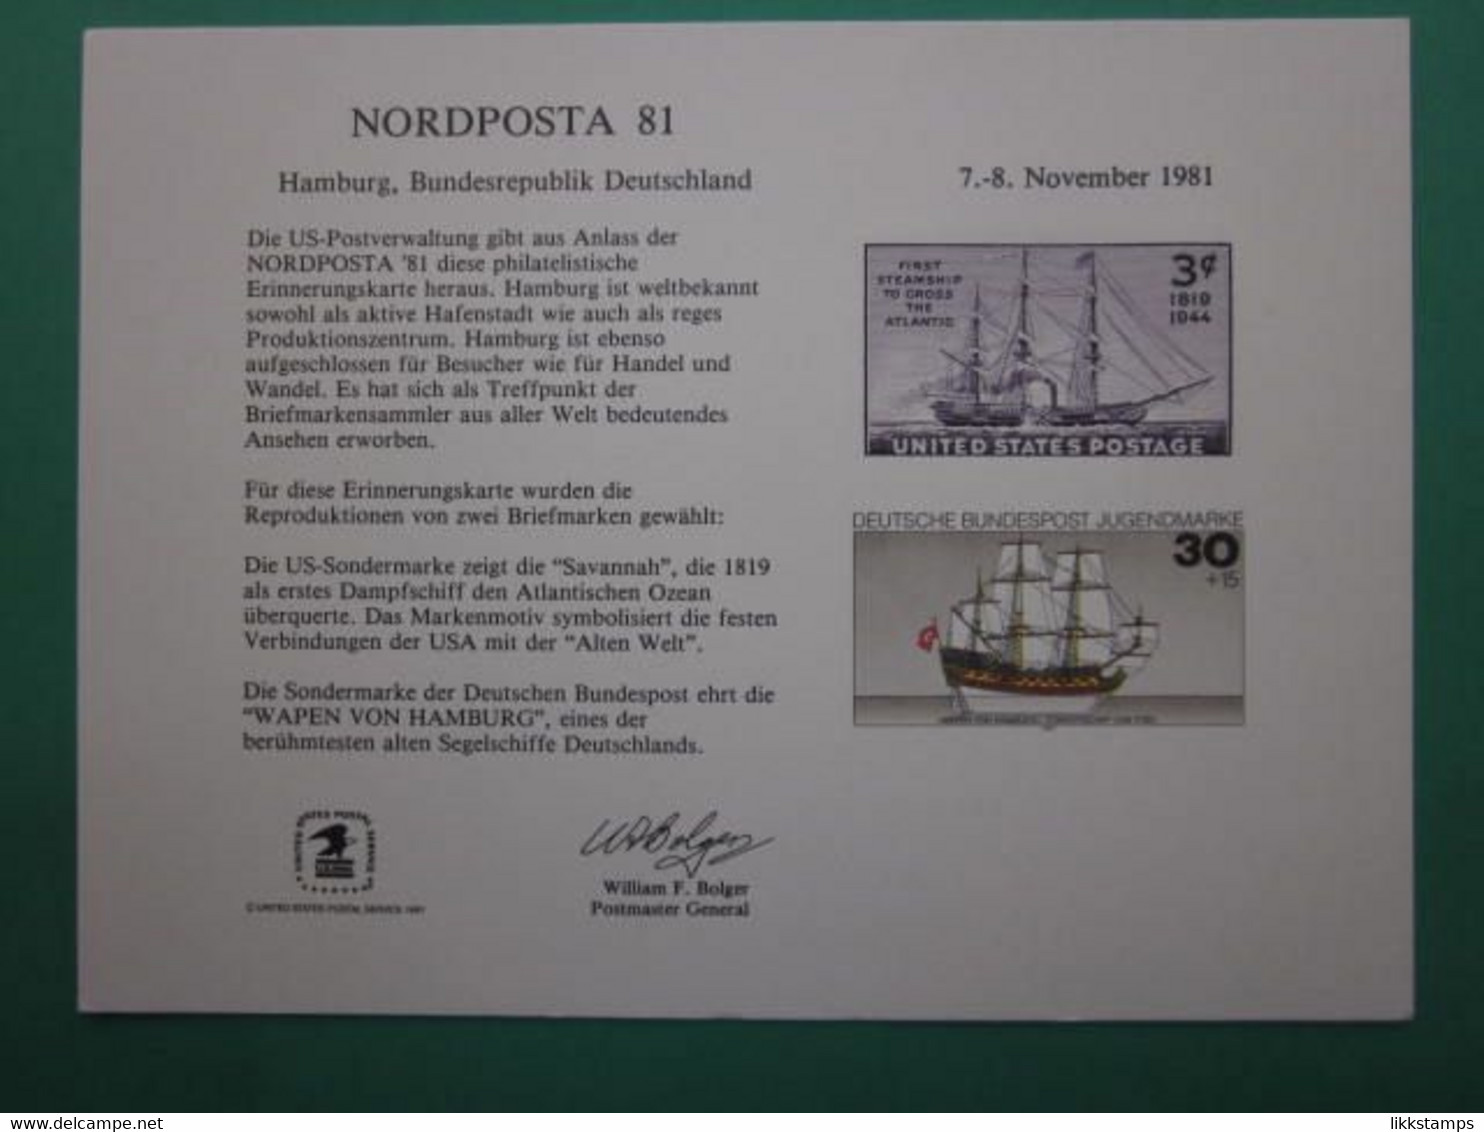 1981 A SOUVENIR CARD FOR NORDPOSTA 81, HAMBURG, GERMANY. ( 02188 ) - Souvenirs & Special Cards